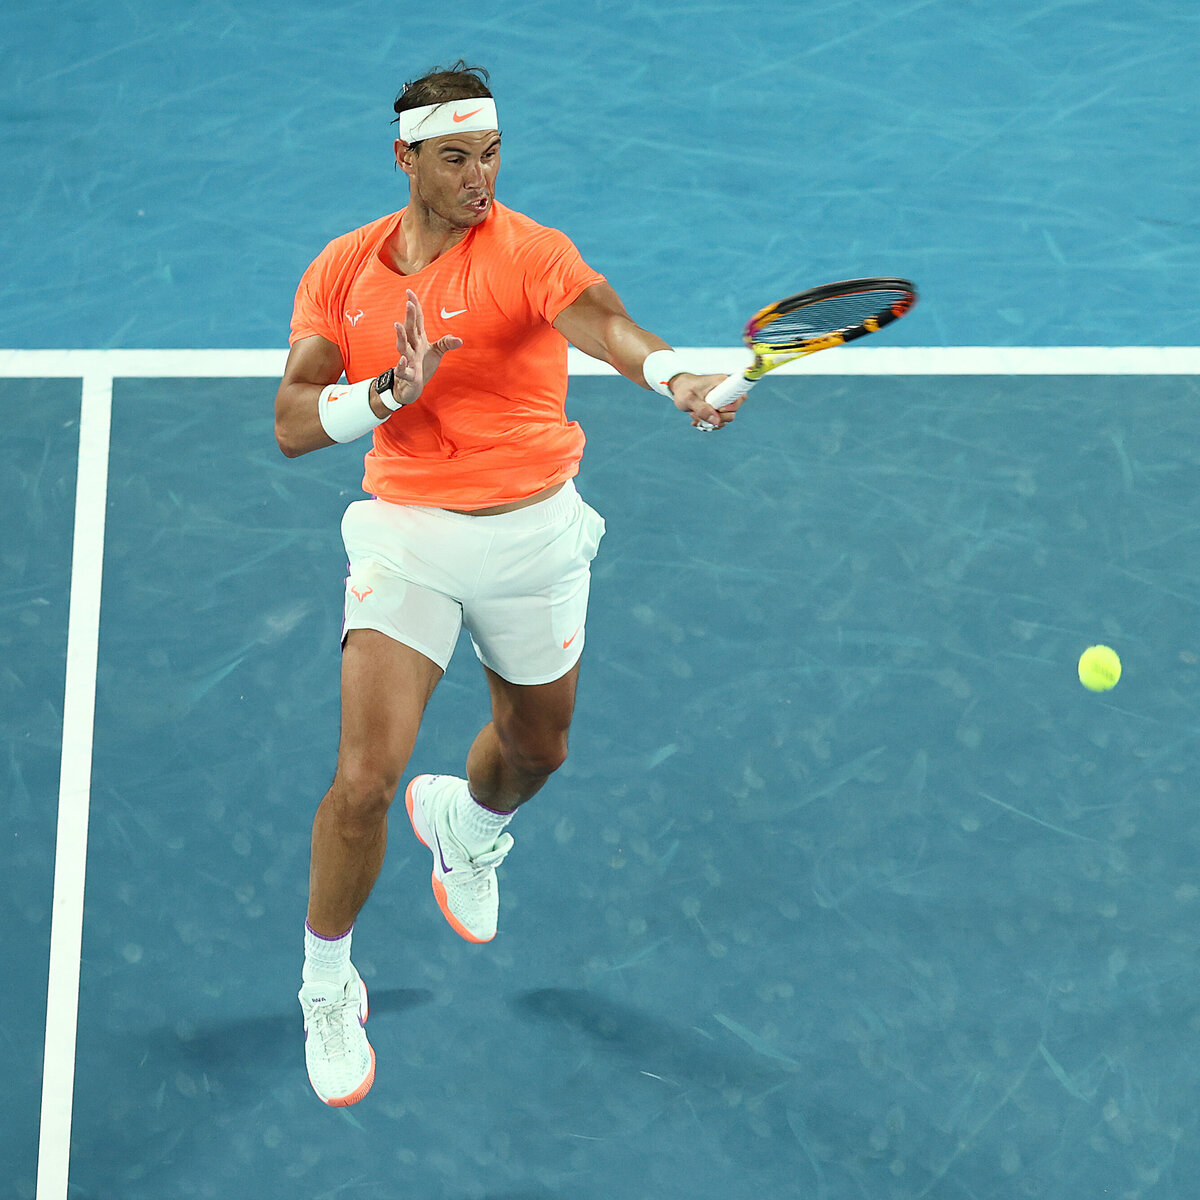 Australian Open 2021 live Rafael Nadal vs